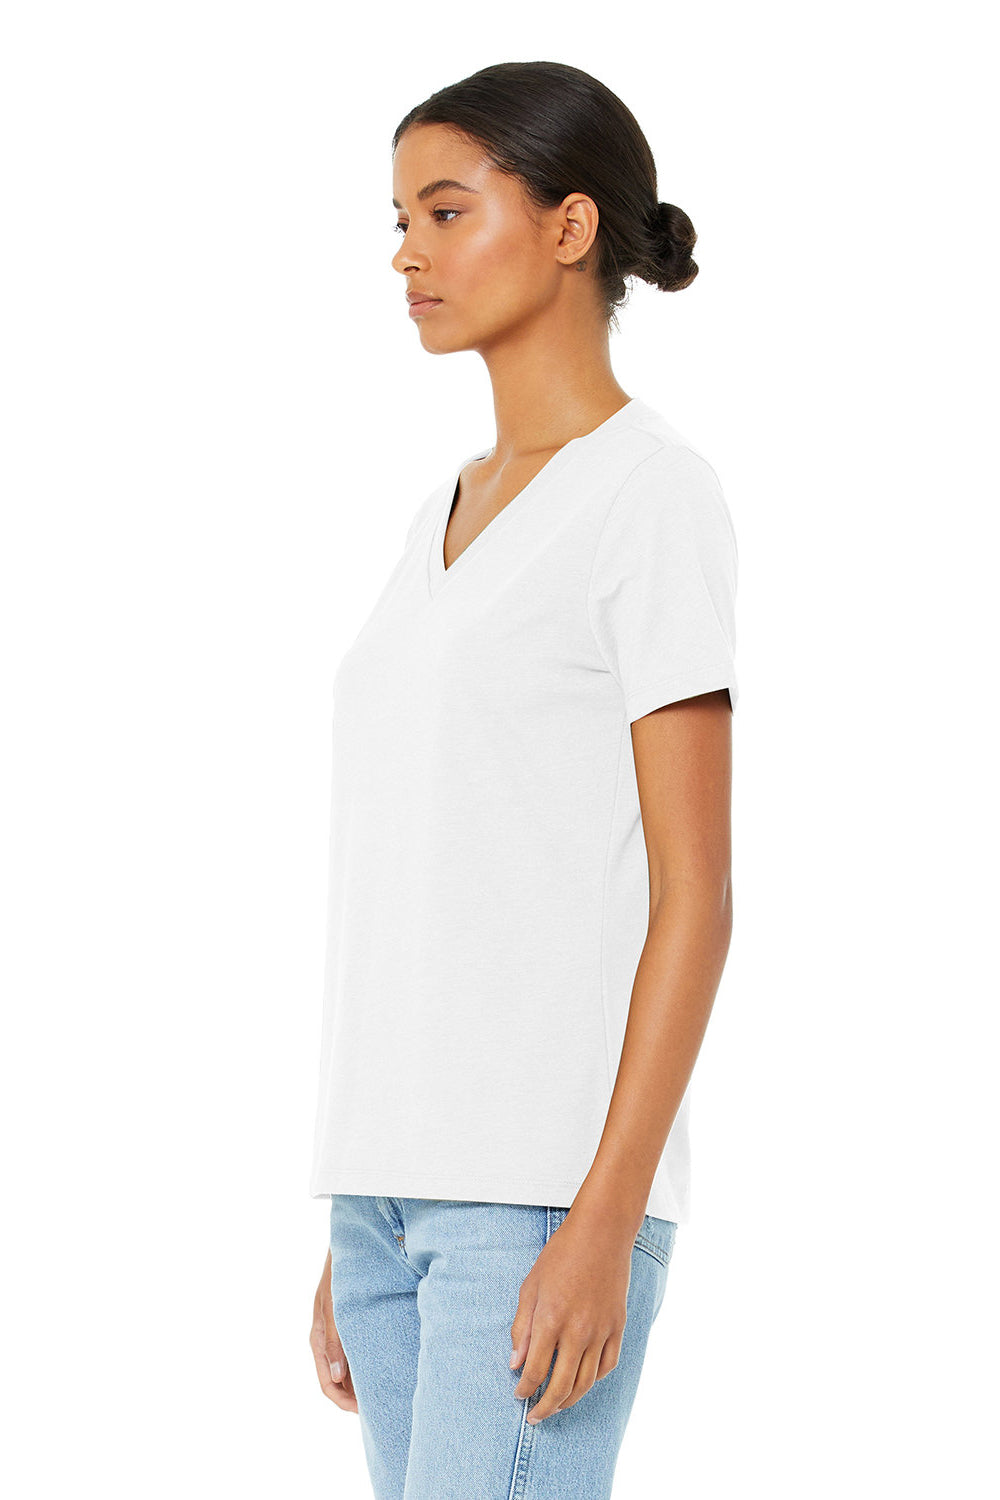 Bella + Canvas BC6405CVC Womens CVC Short Sleeve V-Neck T-Shirt Solid White Model 3Q